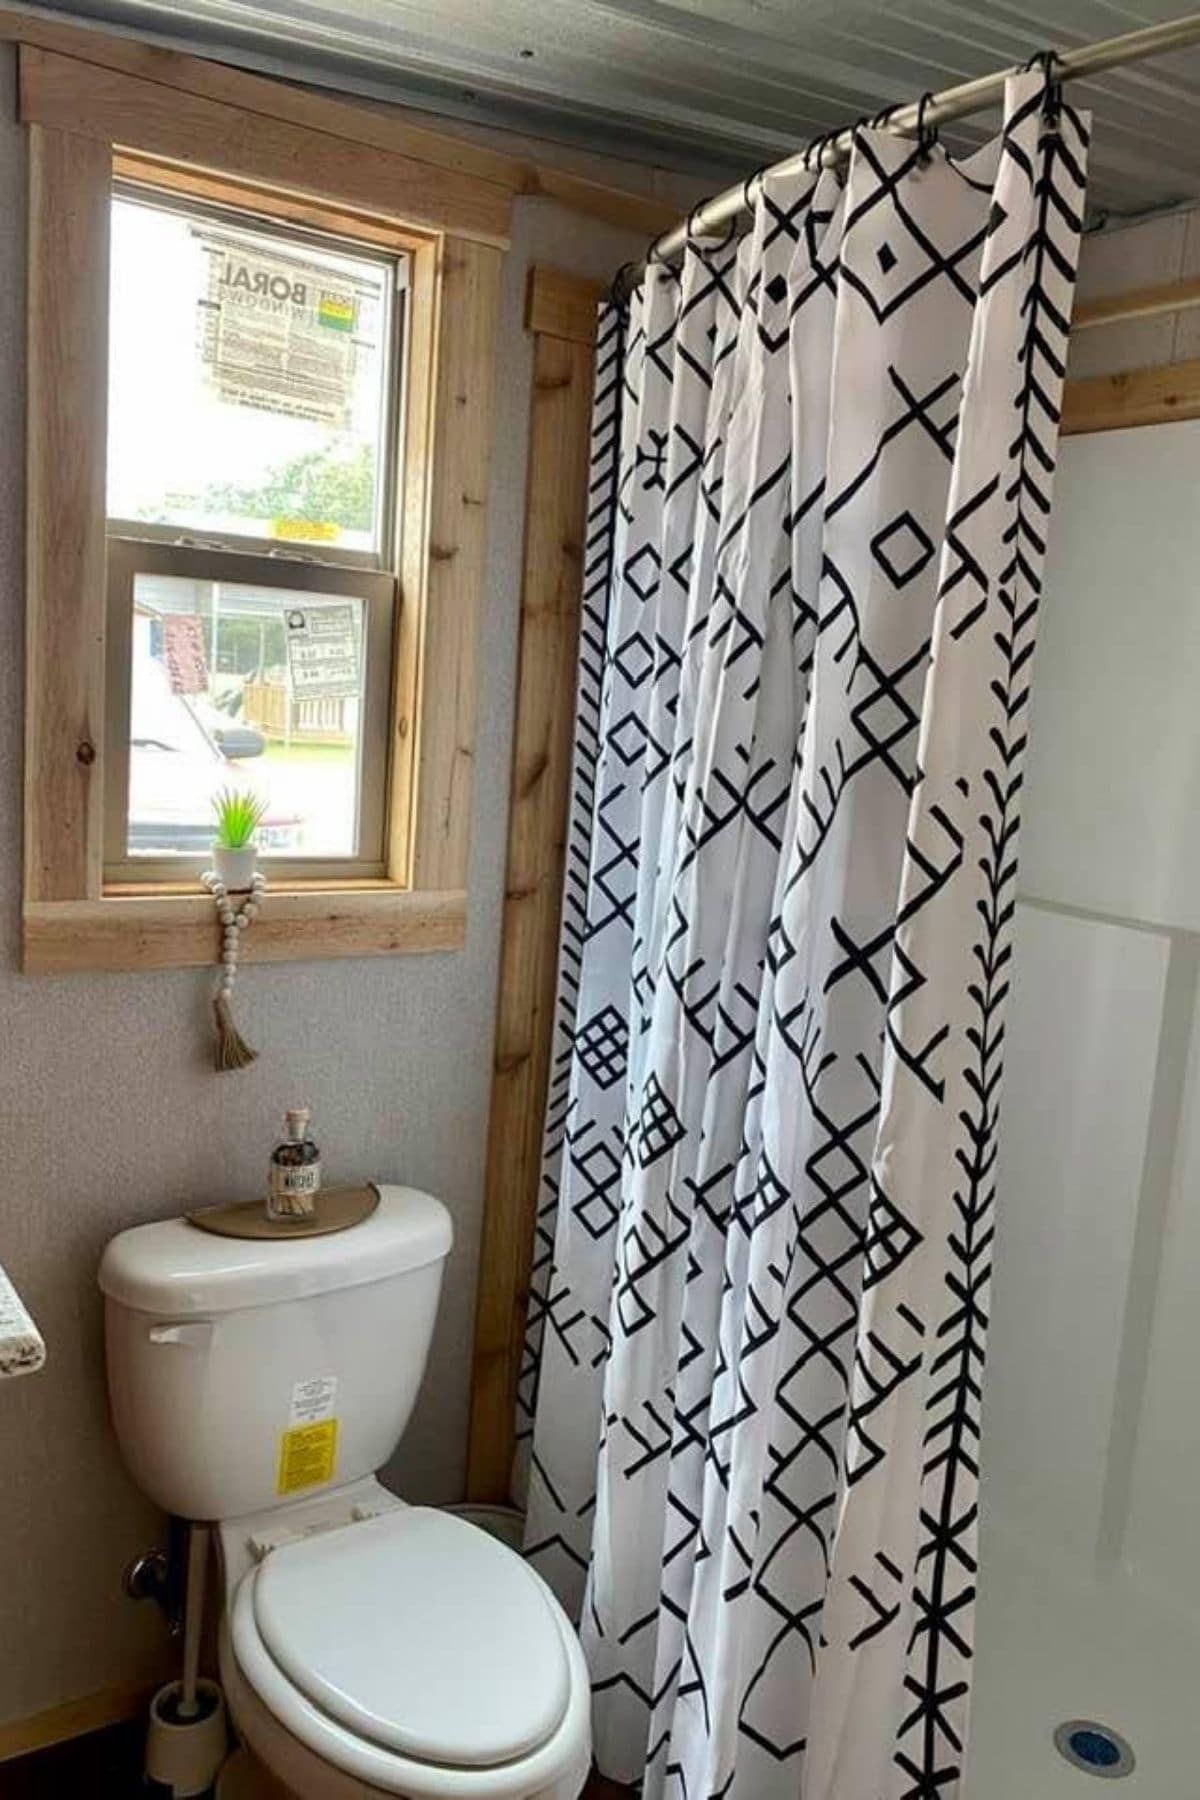 flush toilet next to shower stall under window with wood trim